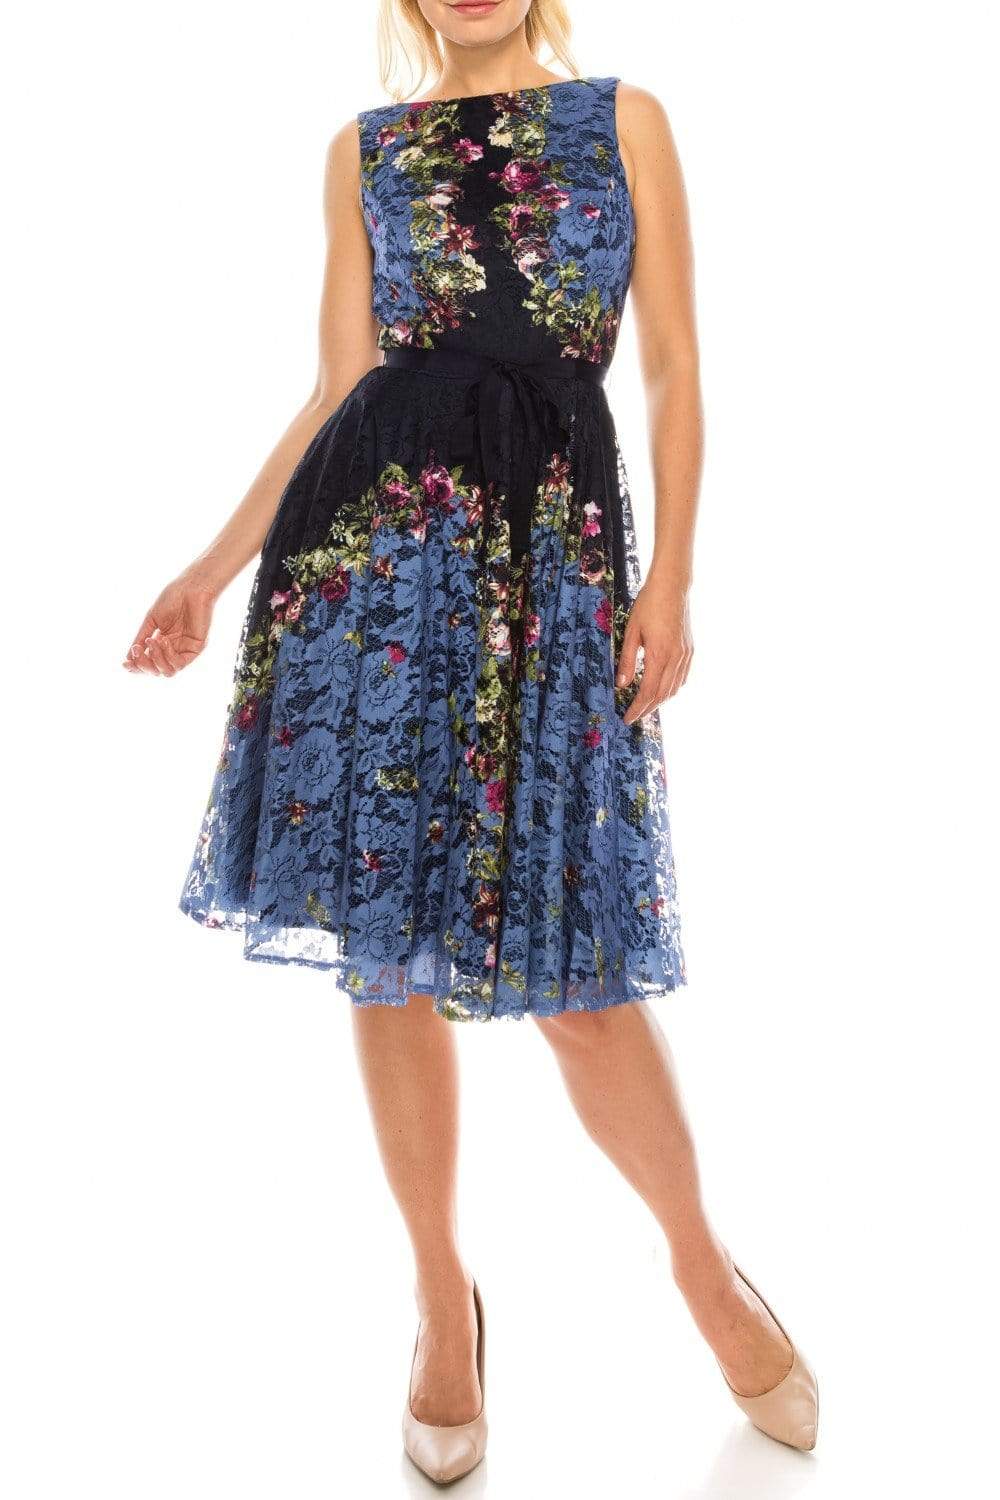 Image of Gabby Skye - 57369MG Sleeveless Floral Print Lace A-Line Dress